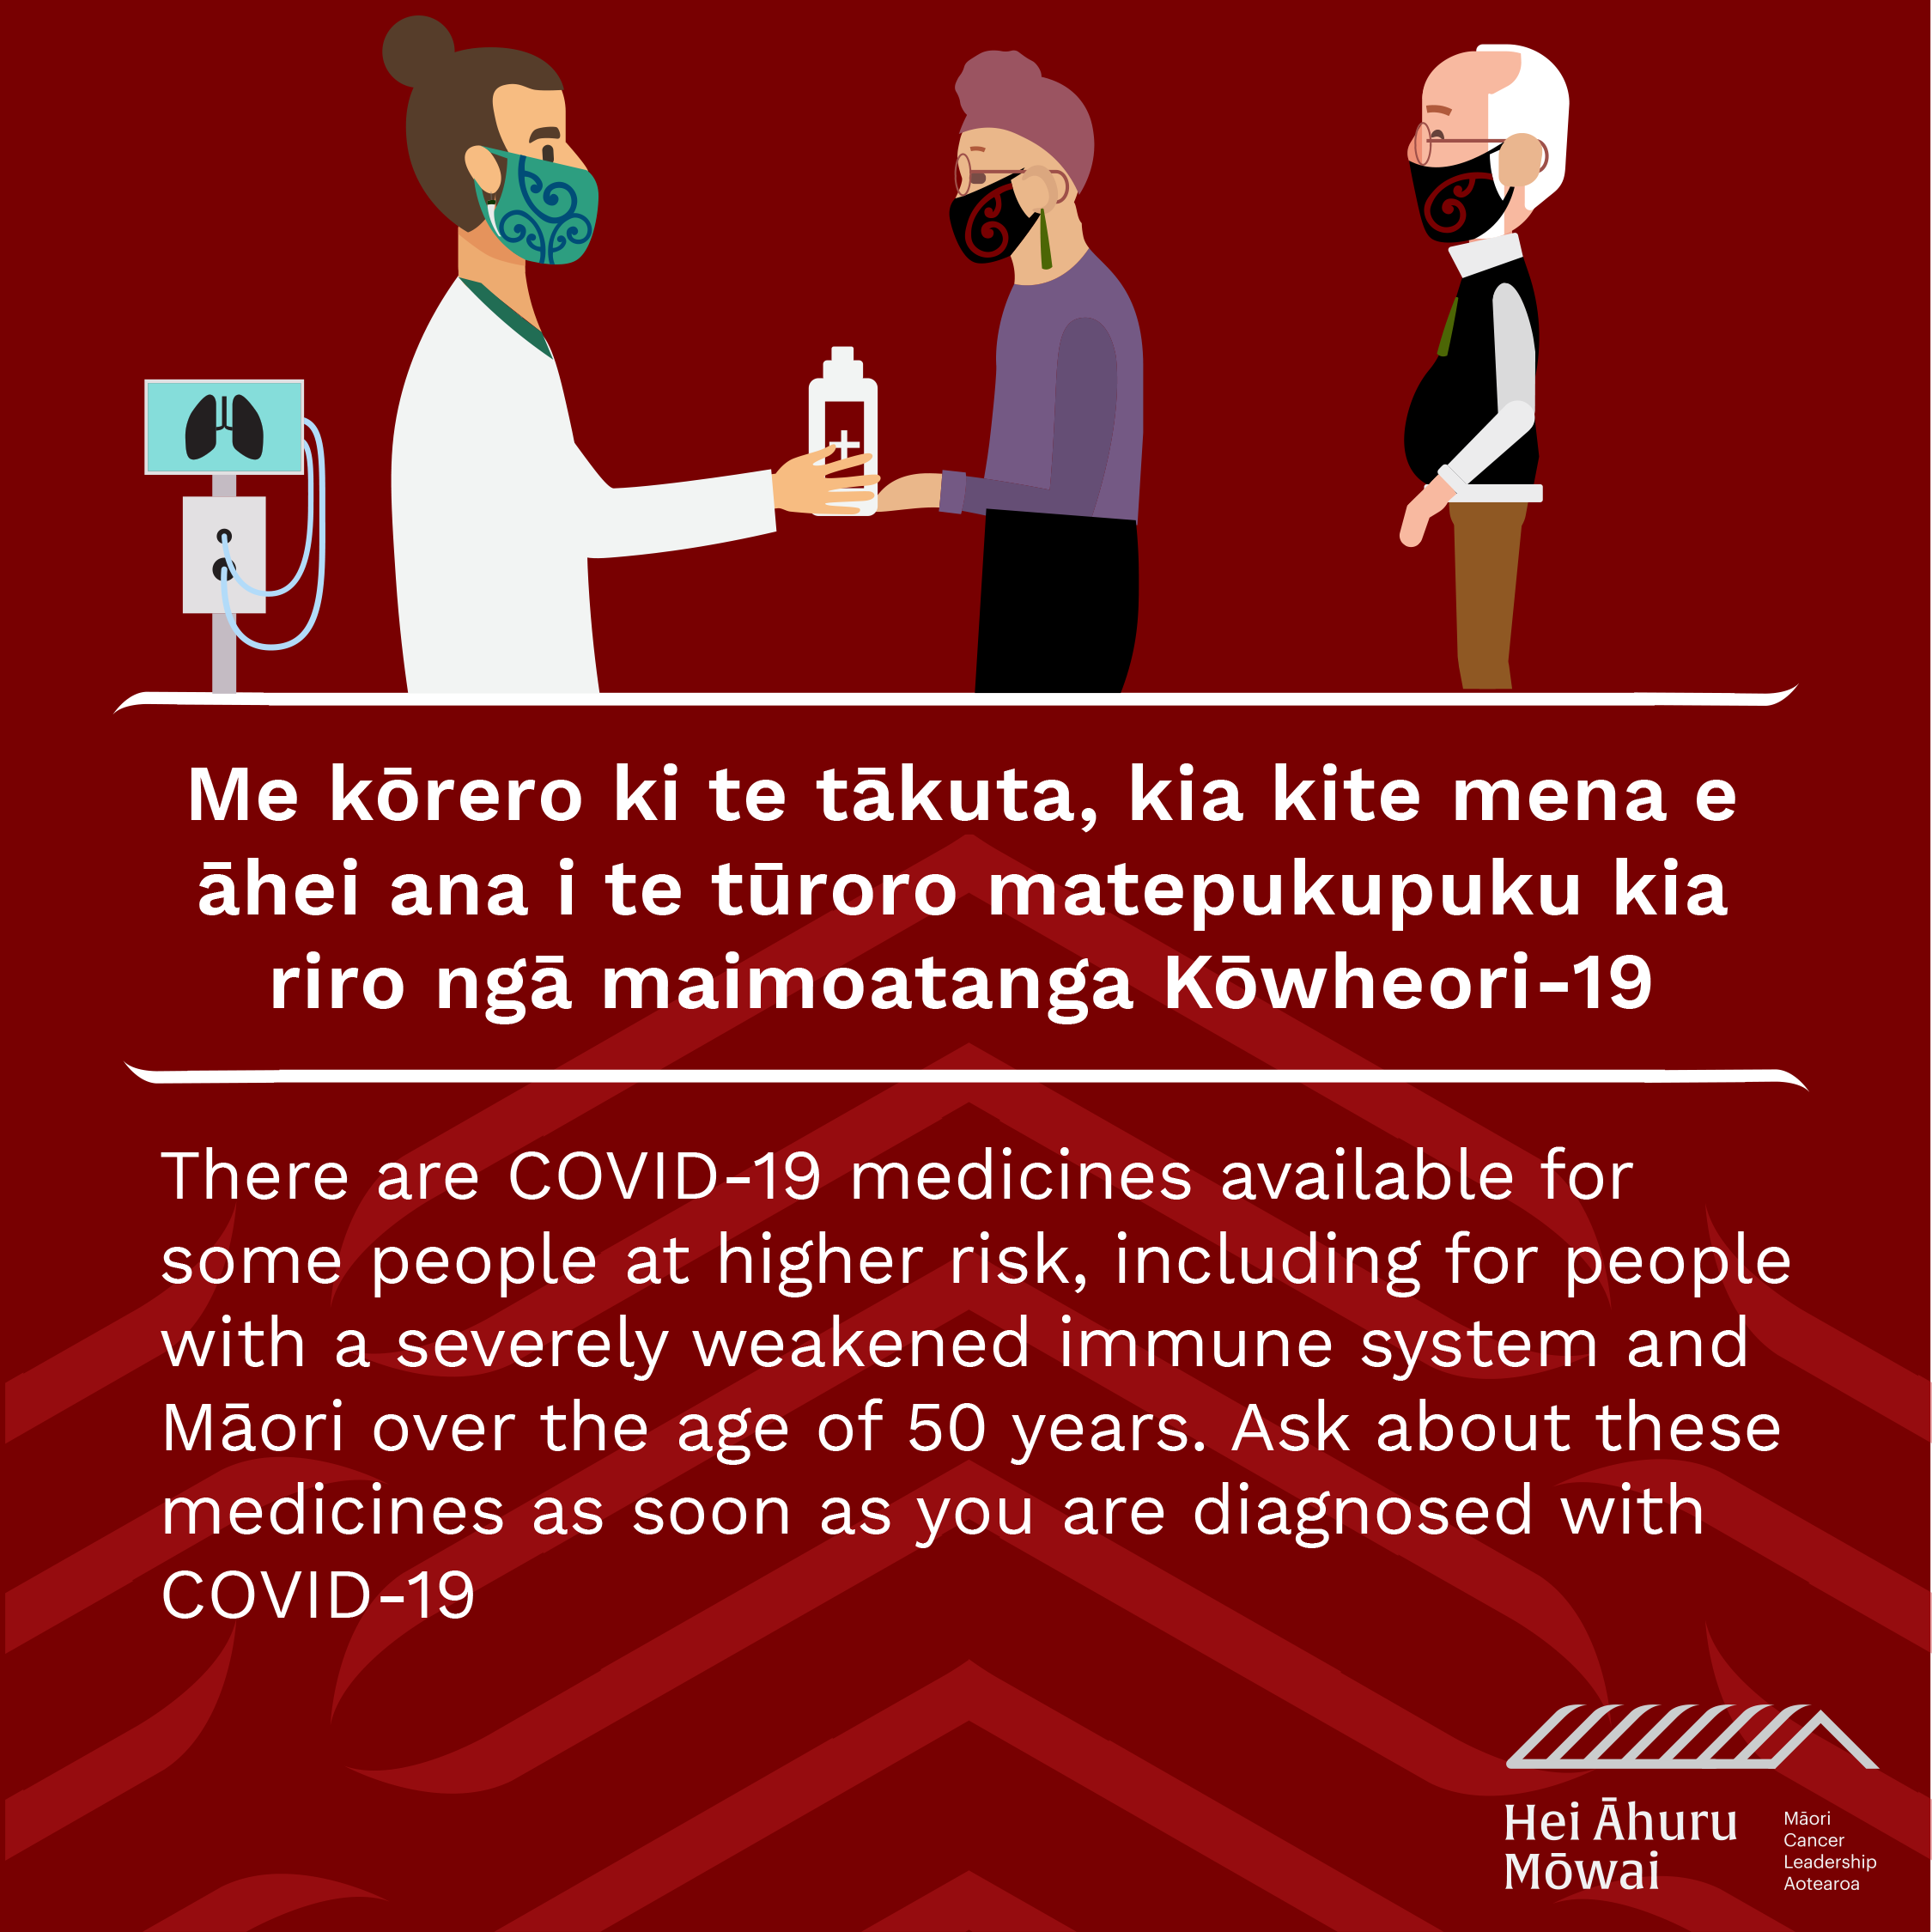 Covid-19 medicines for higher risks.png